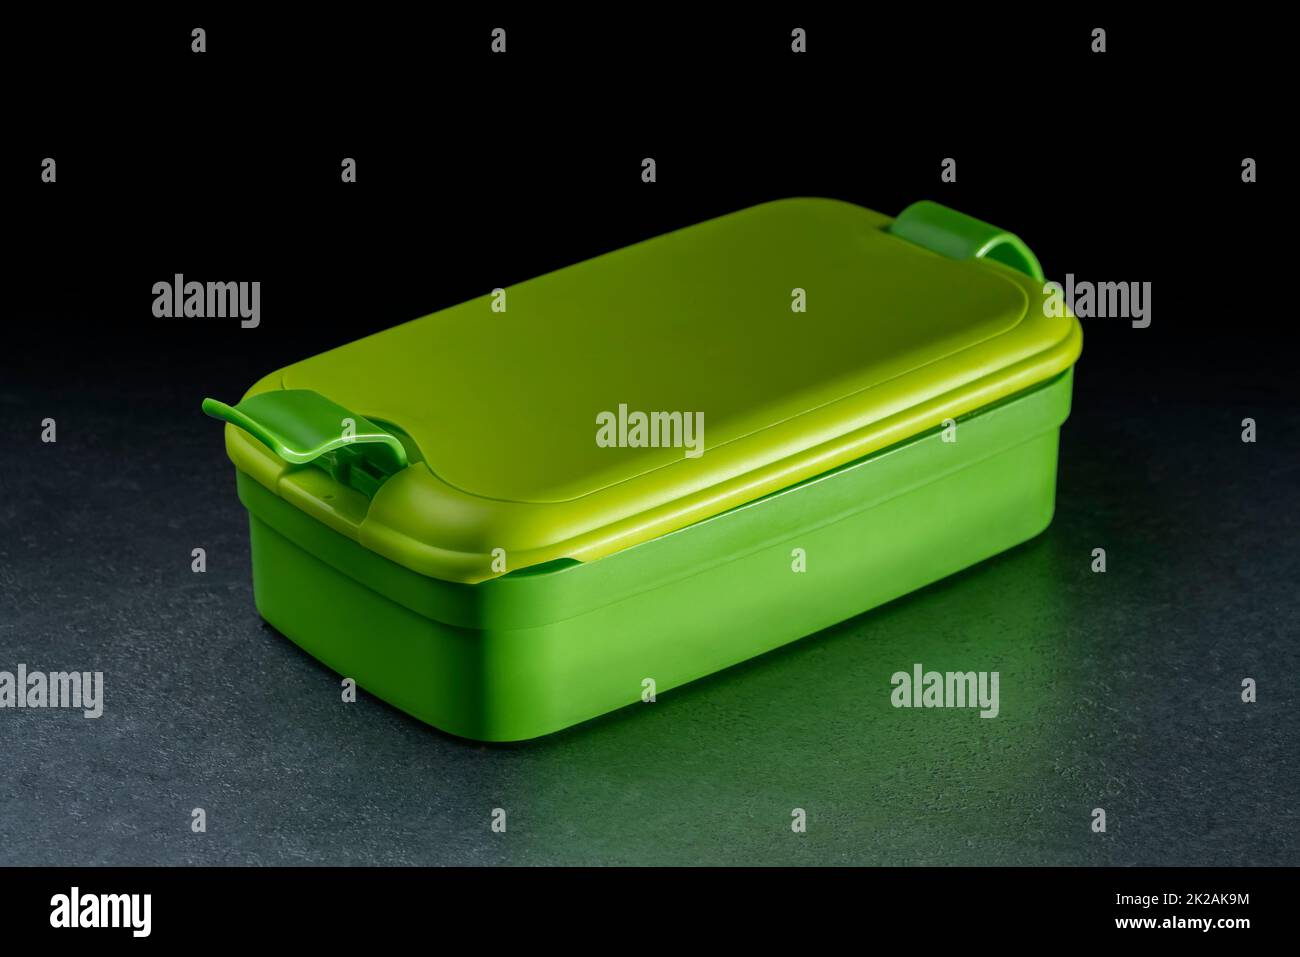 https://c8.alamy.com/comp/2K2AK9M/green-lunchbox-2K2AK9M.jpg